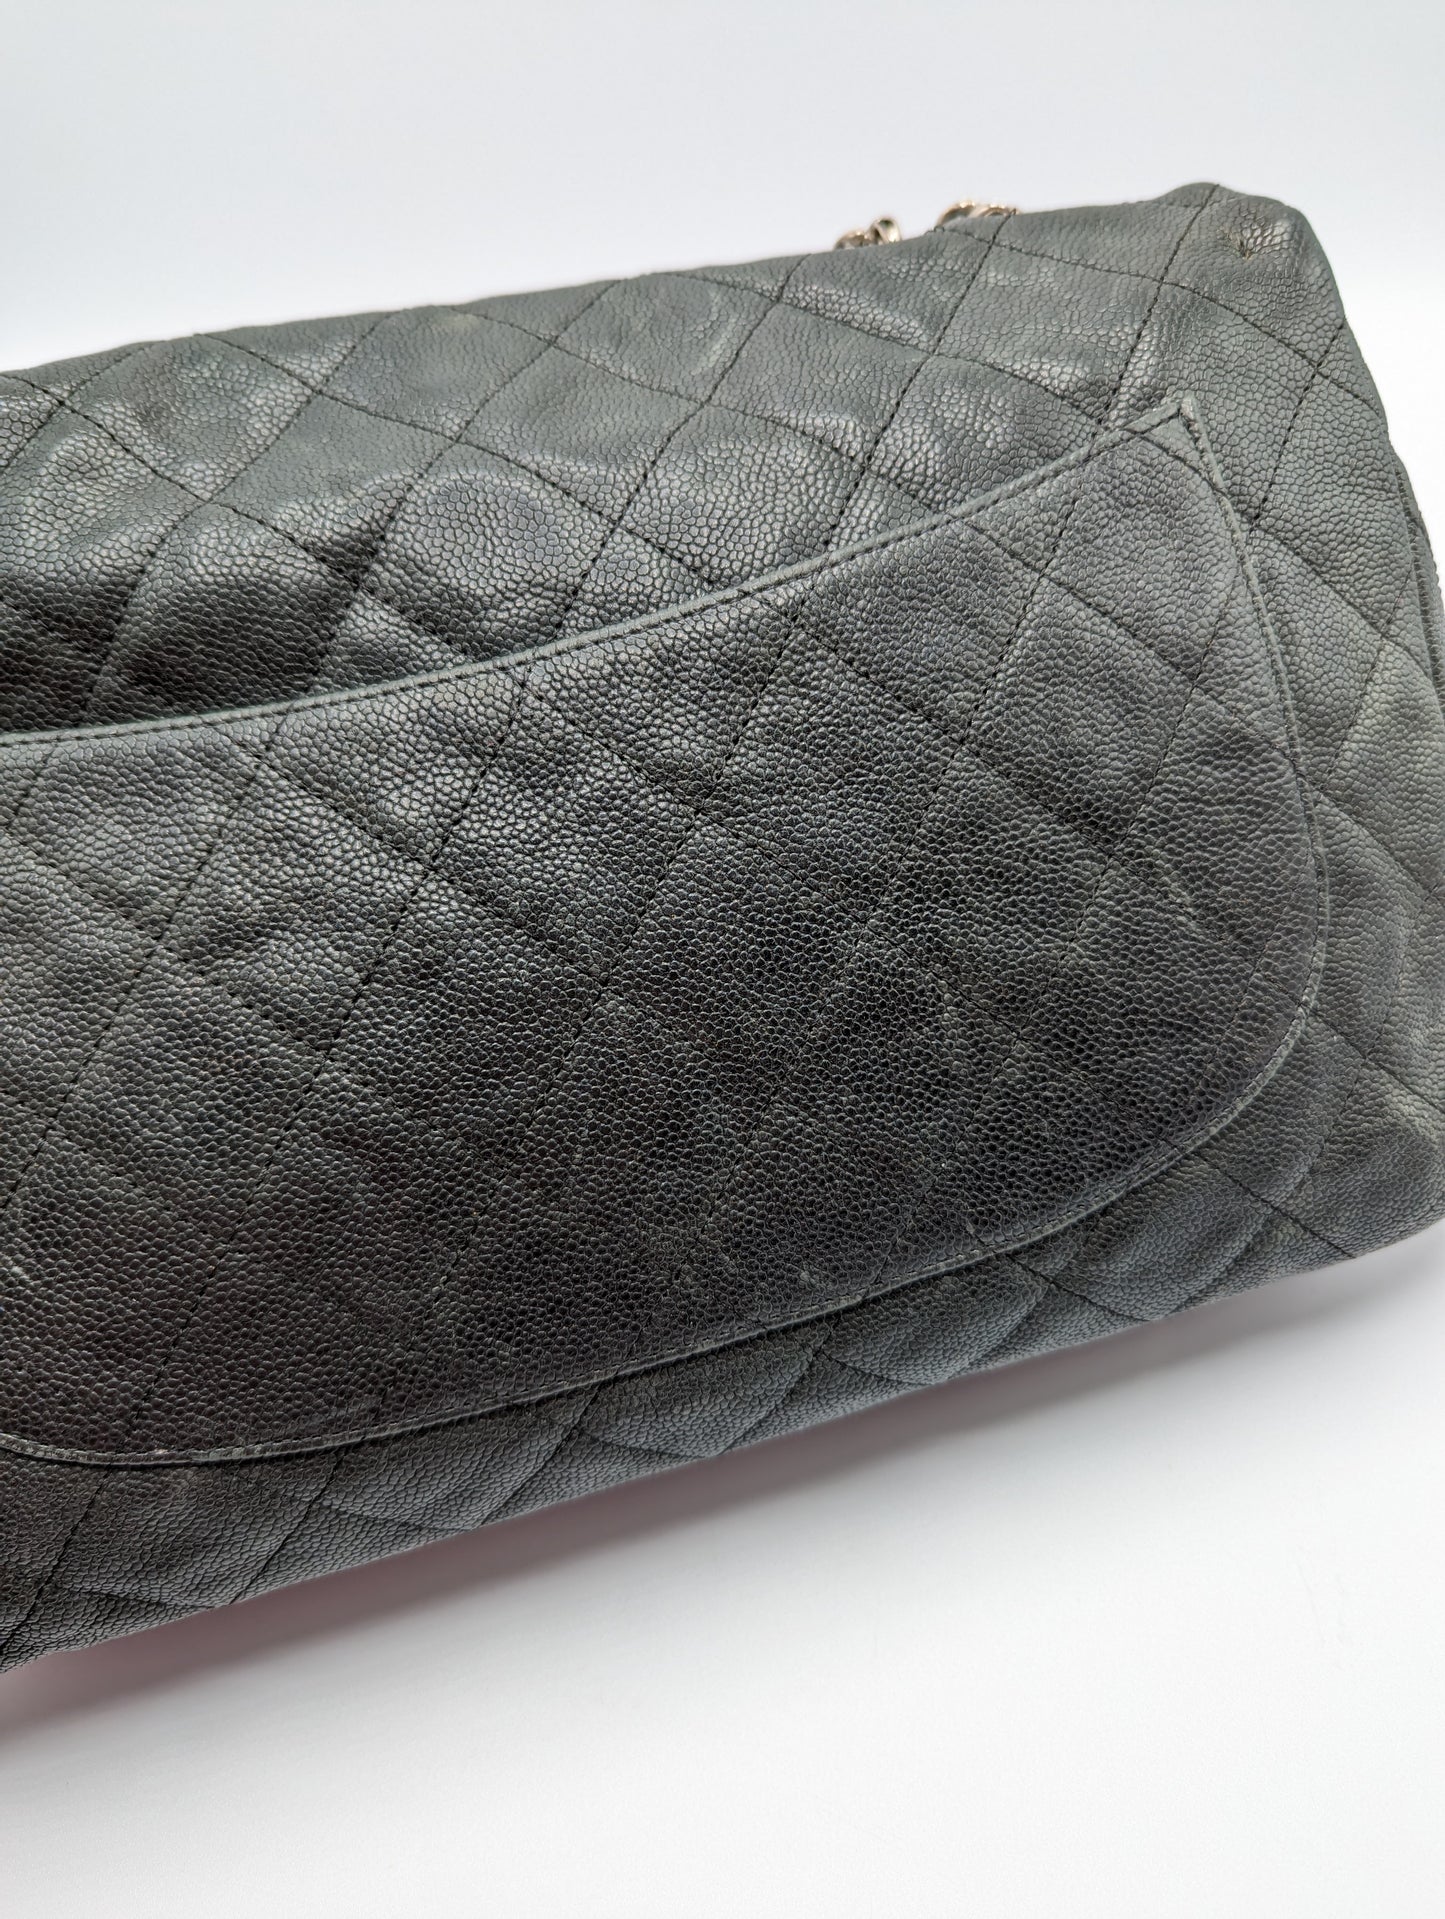 Chanel Charcoal Caviar Reissue Flap Bag